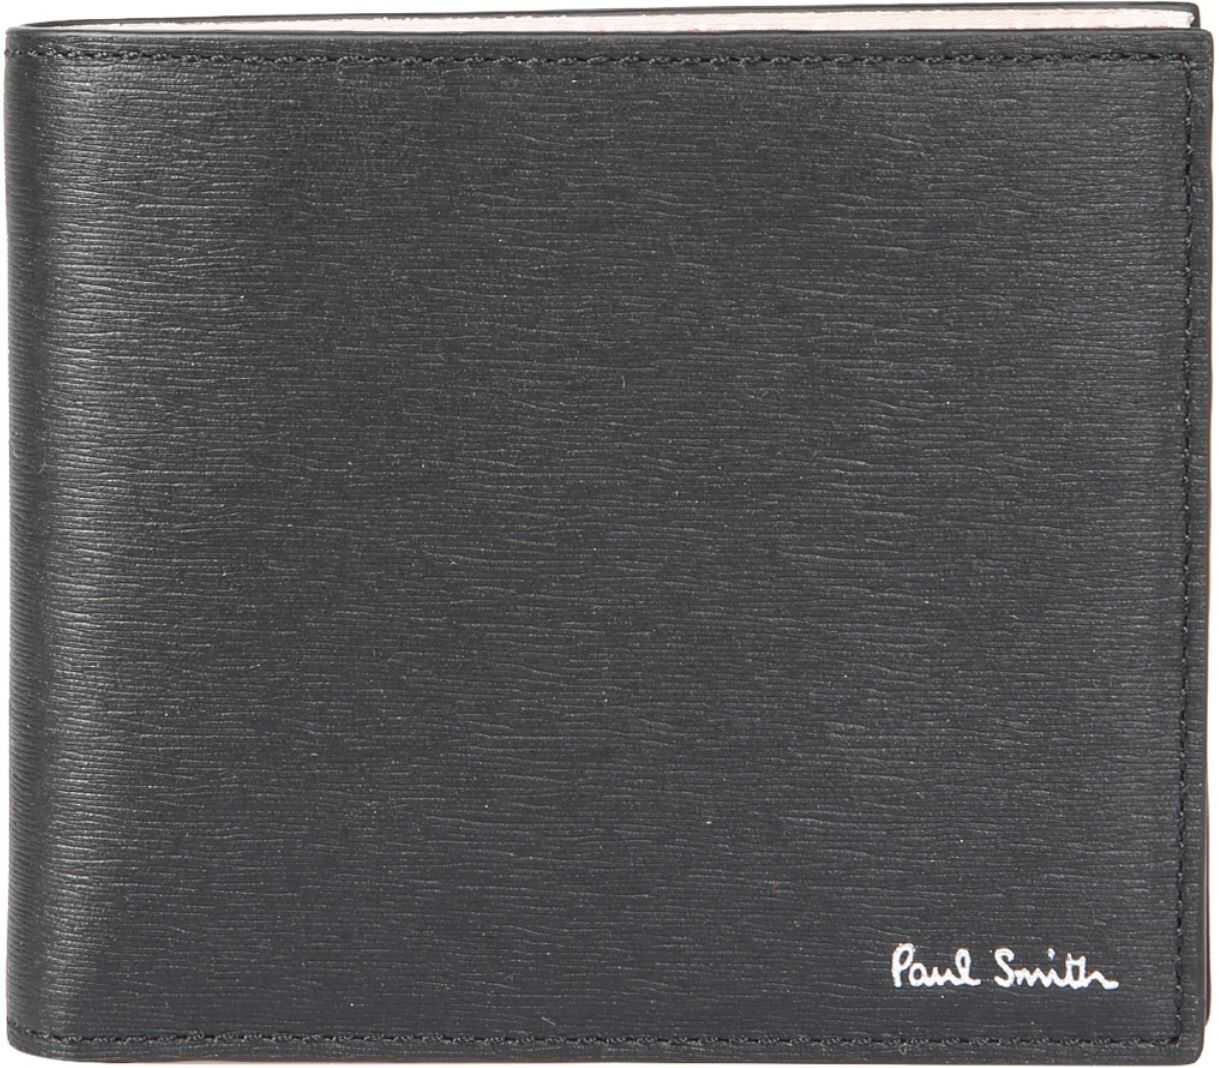 Paul Smith Billfold Wallet BLACK